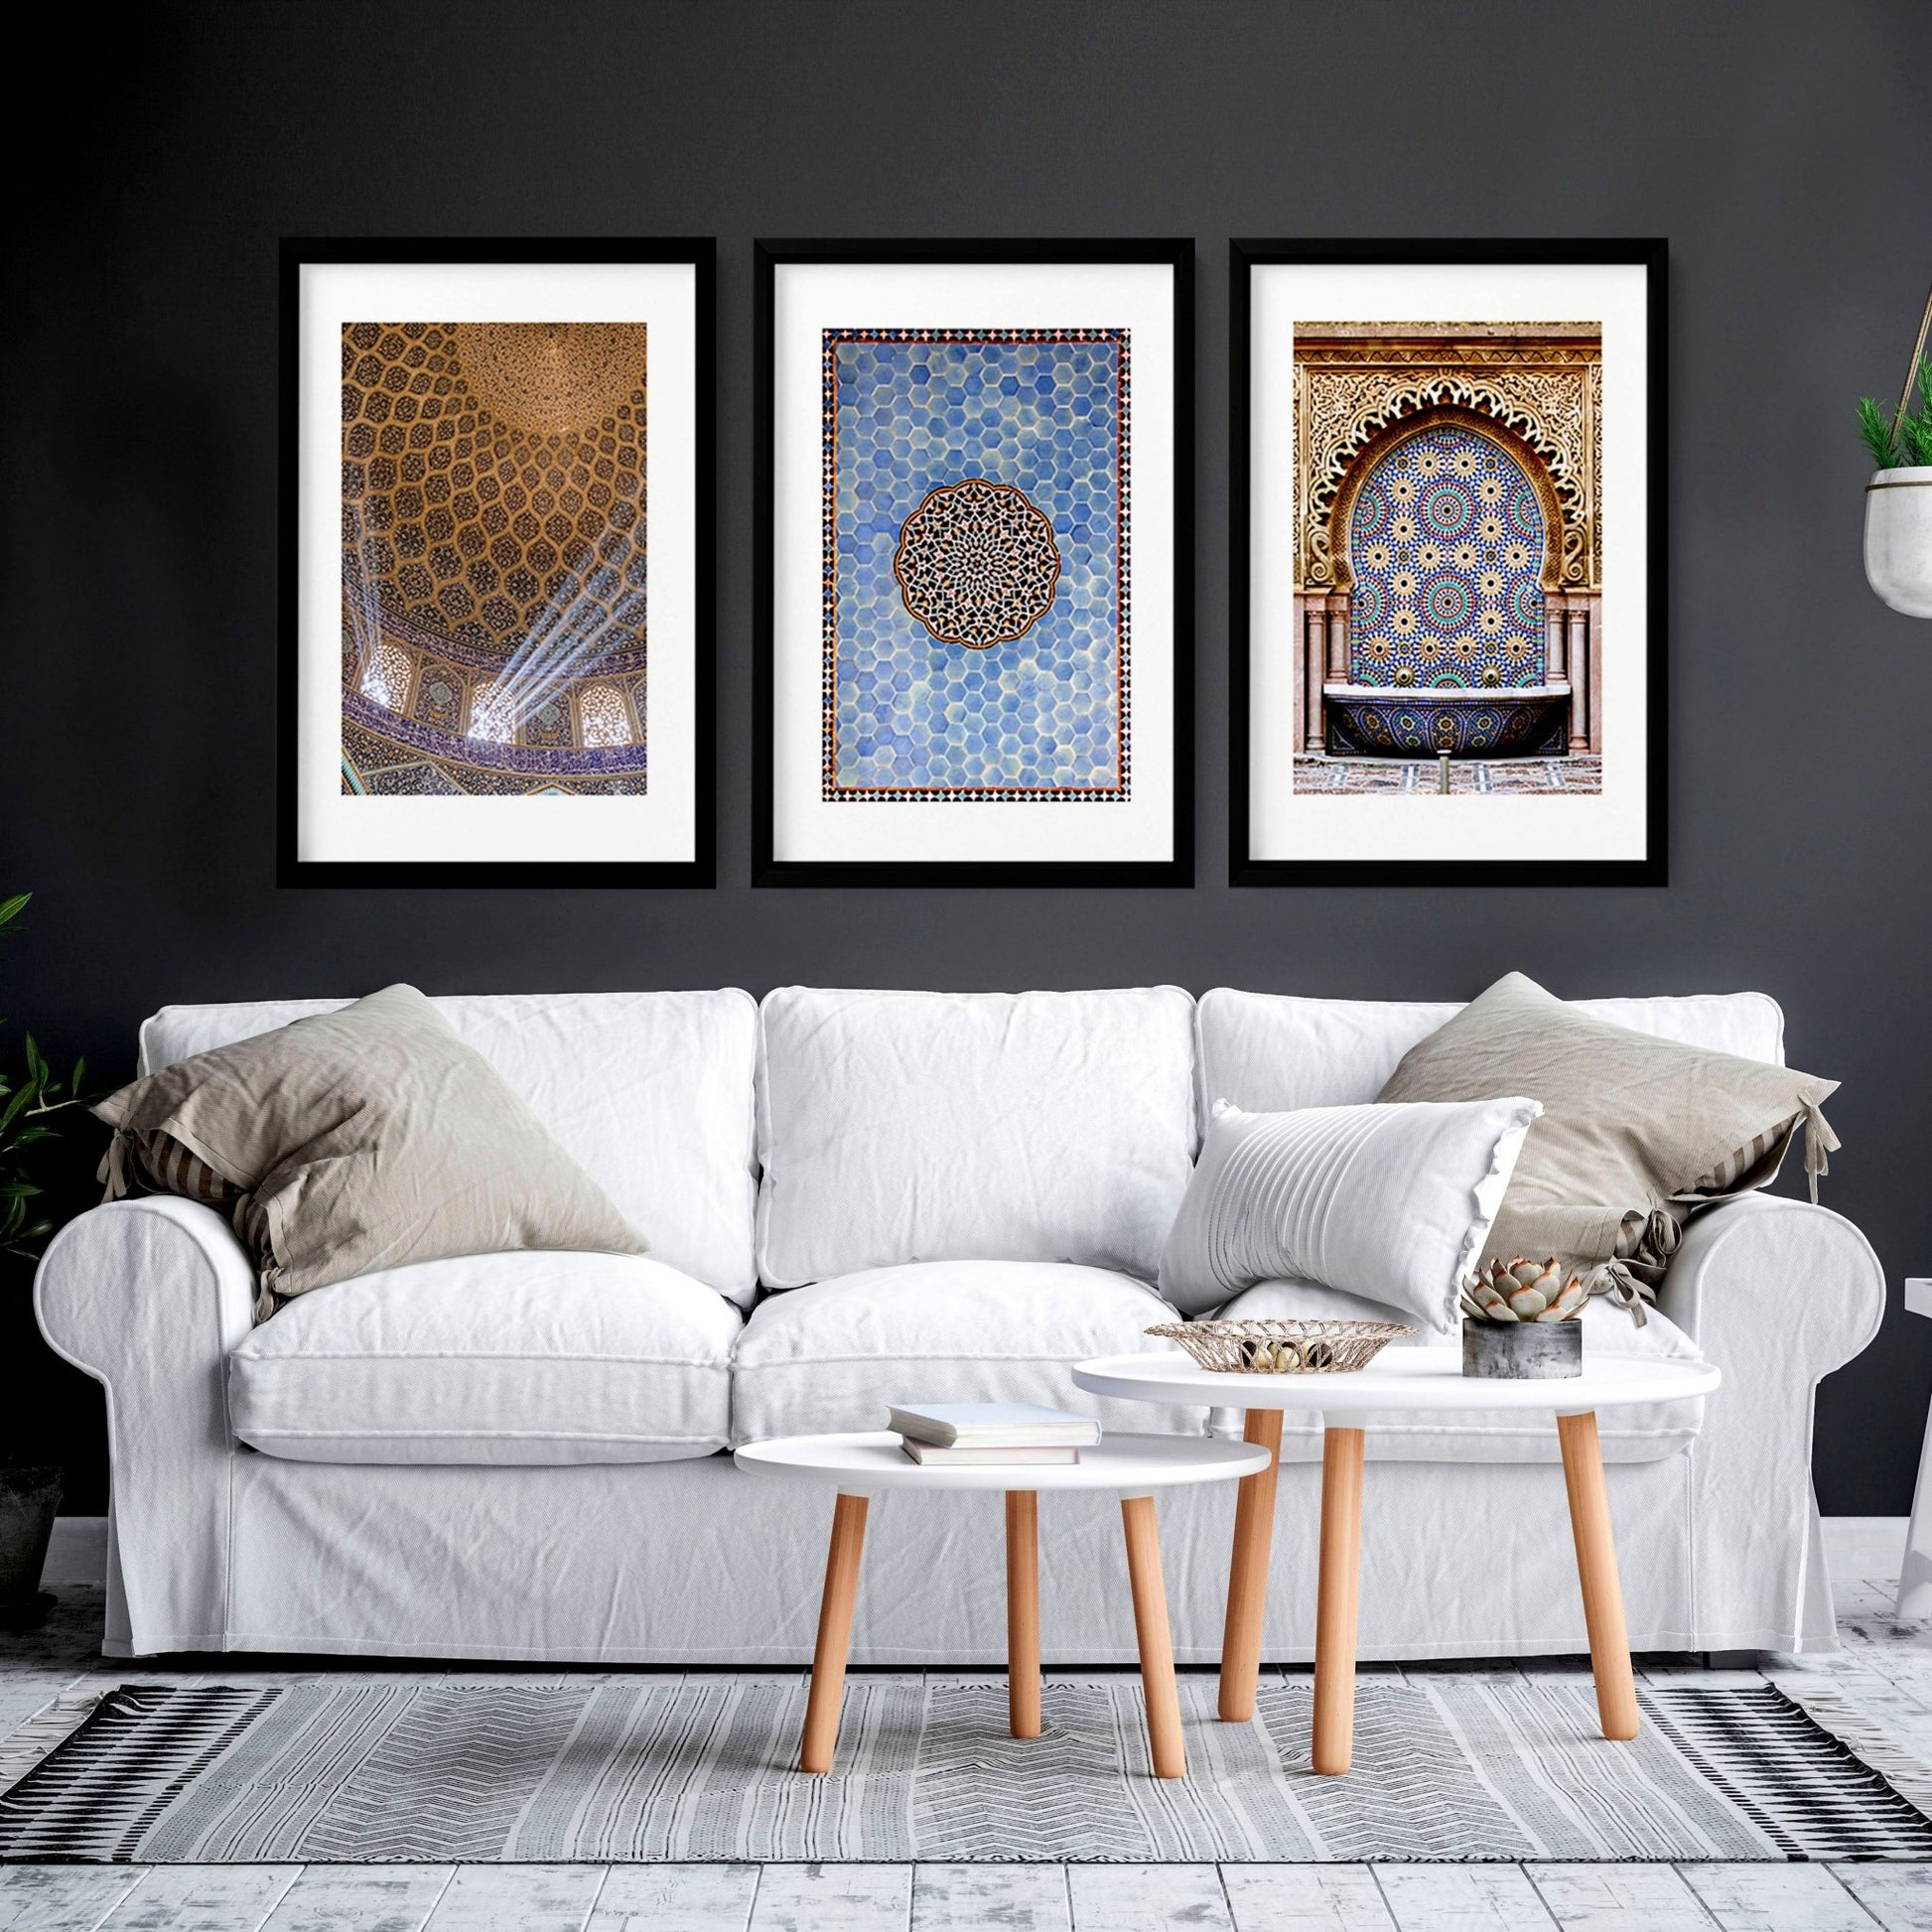 Protection dua decorations | set of 3 wall art prints